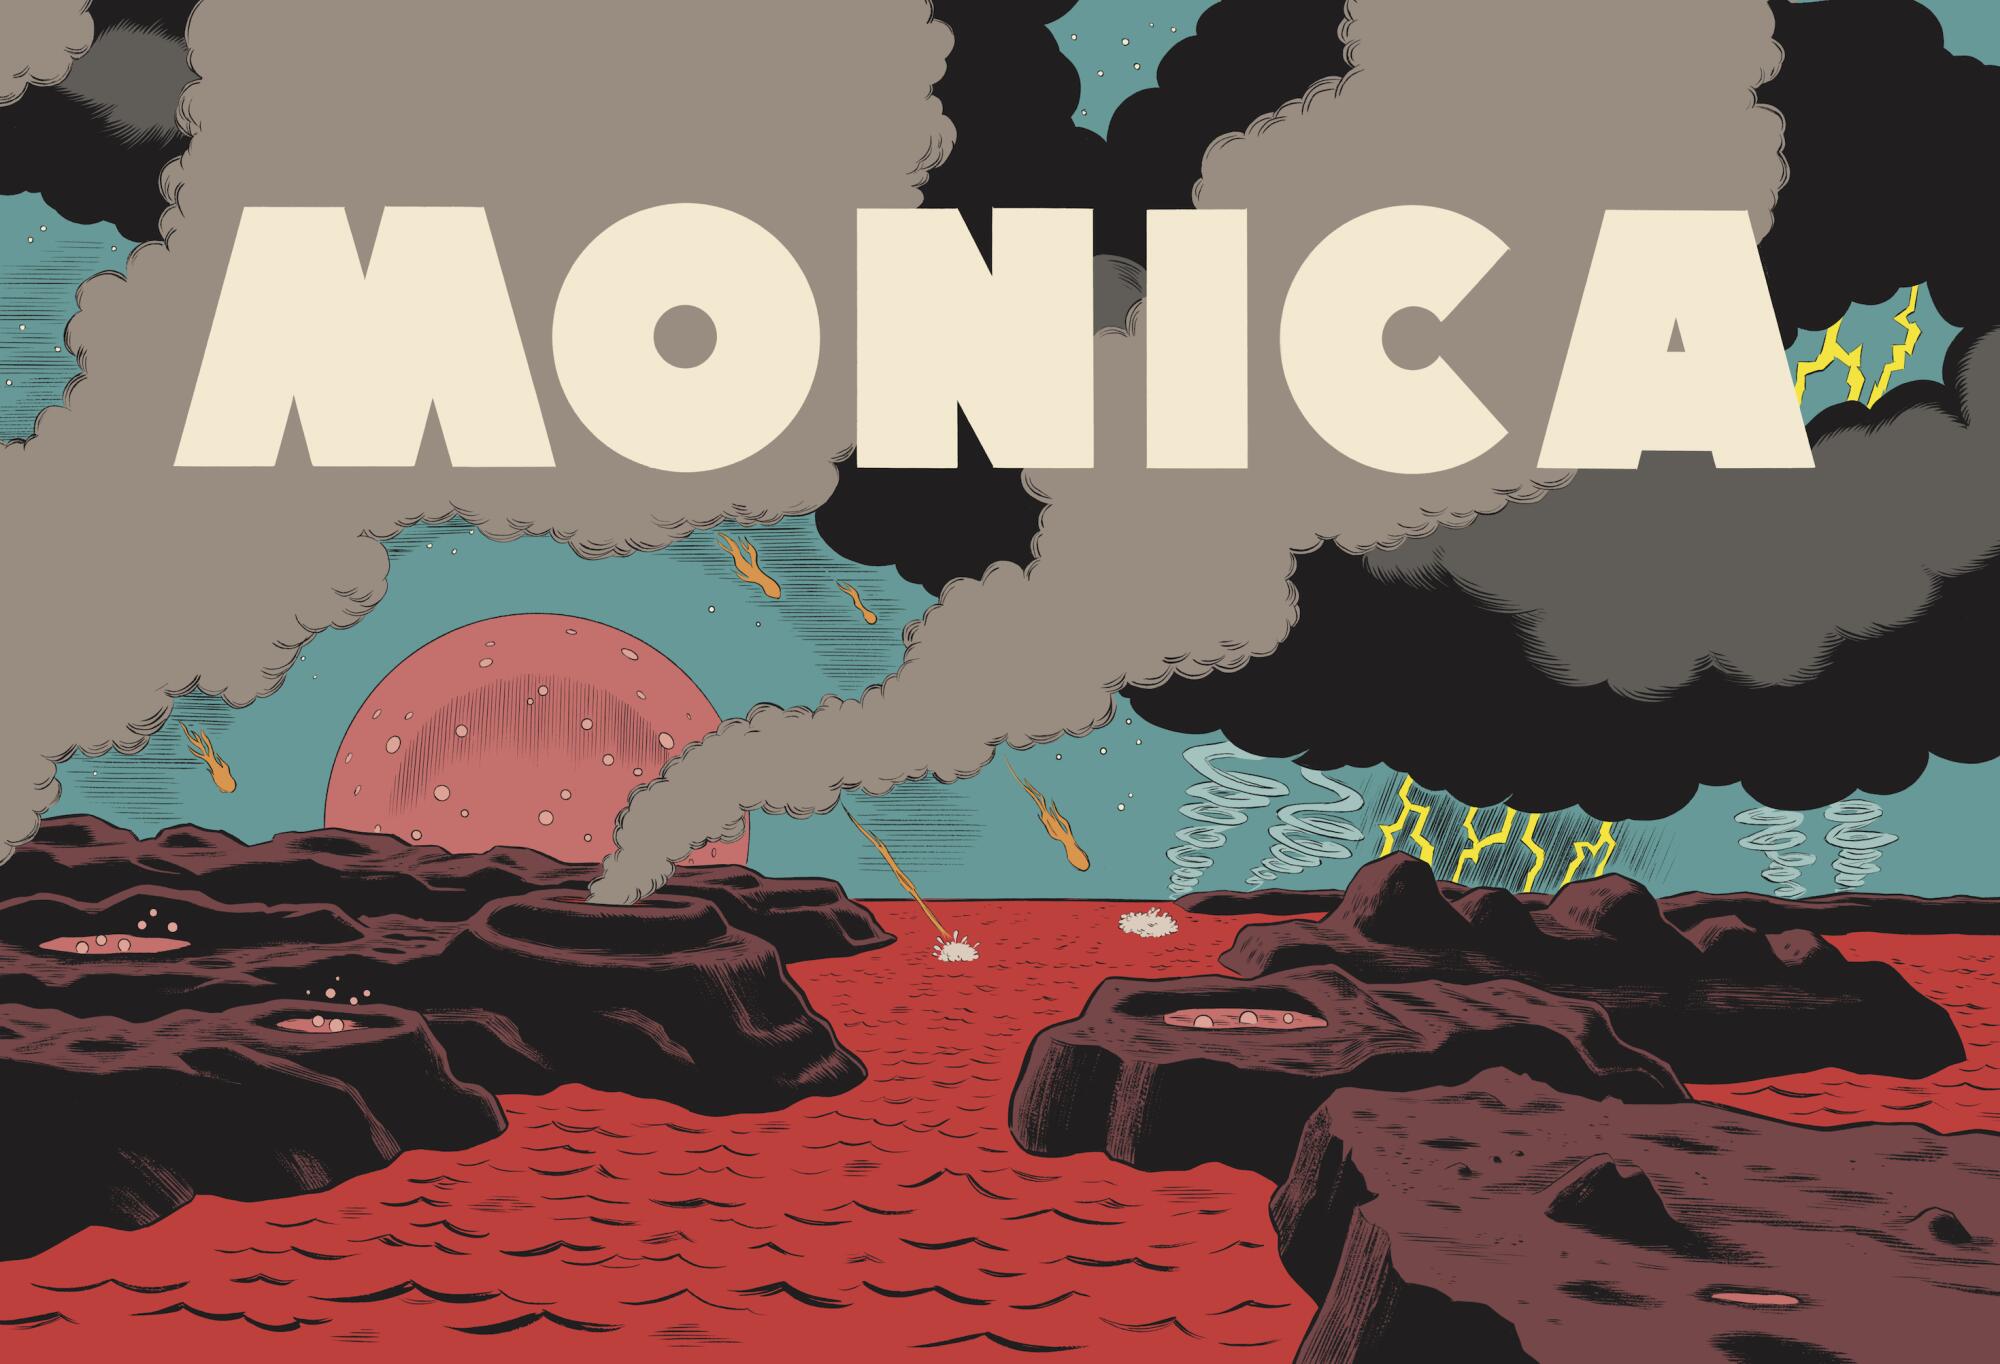 Filmmaker Ari Aster calls his friend Daniel Clowes' "Monica" the comic artist's "magnum opus."